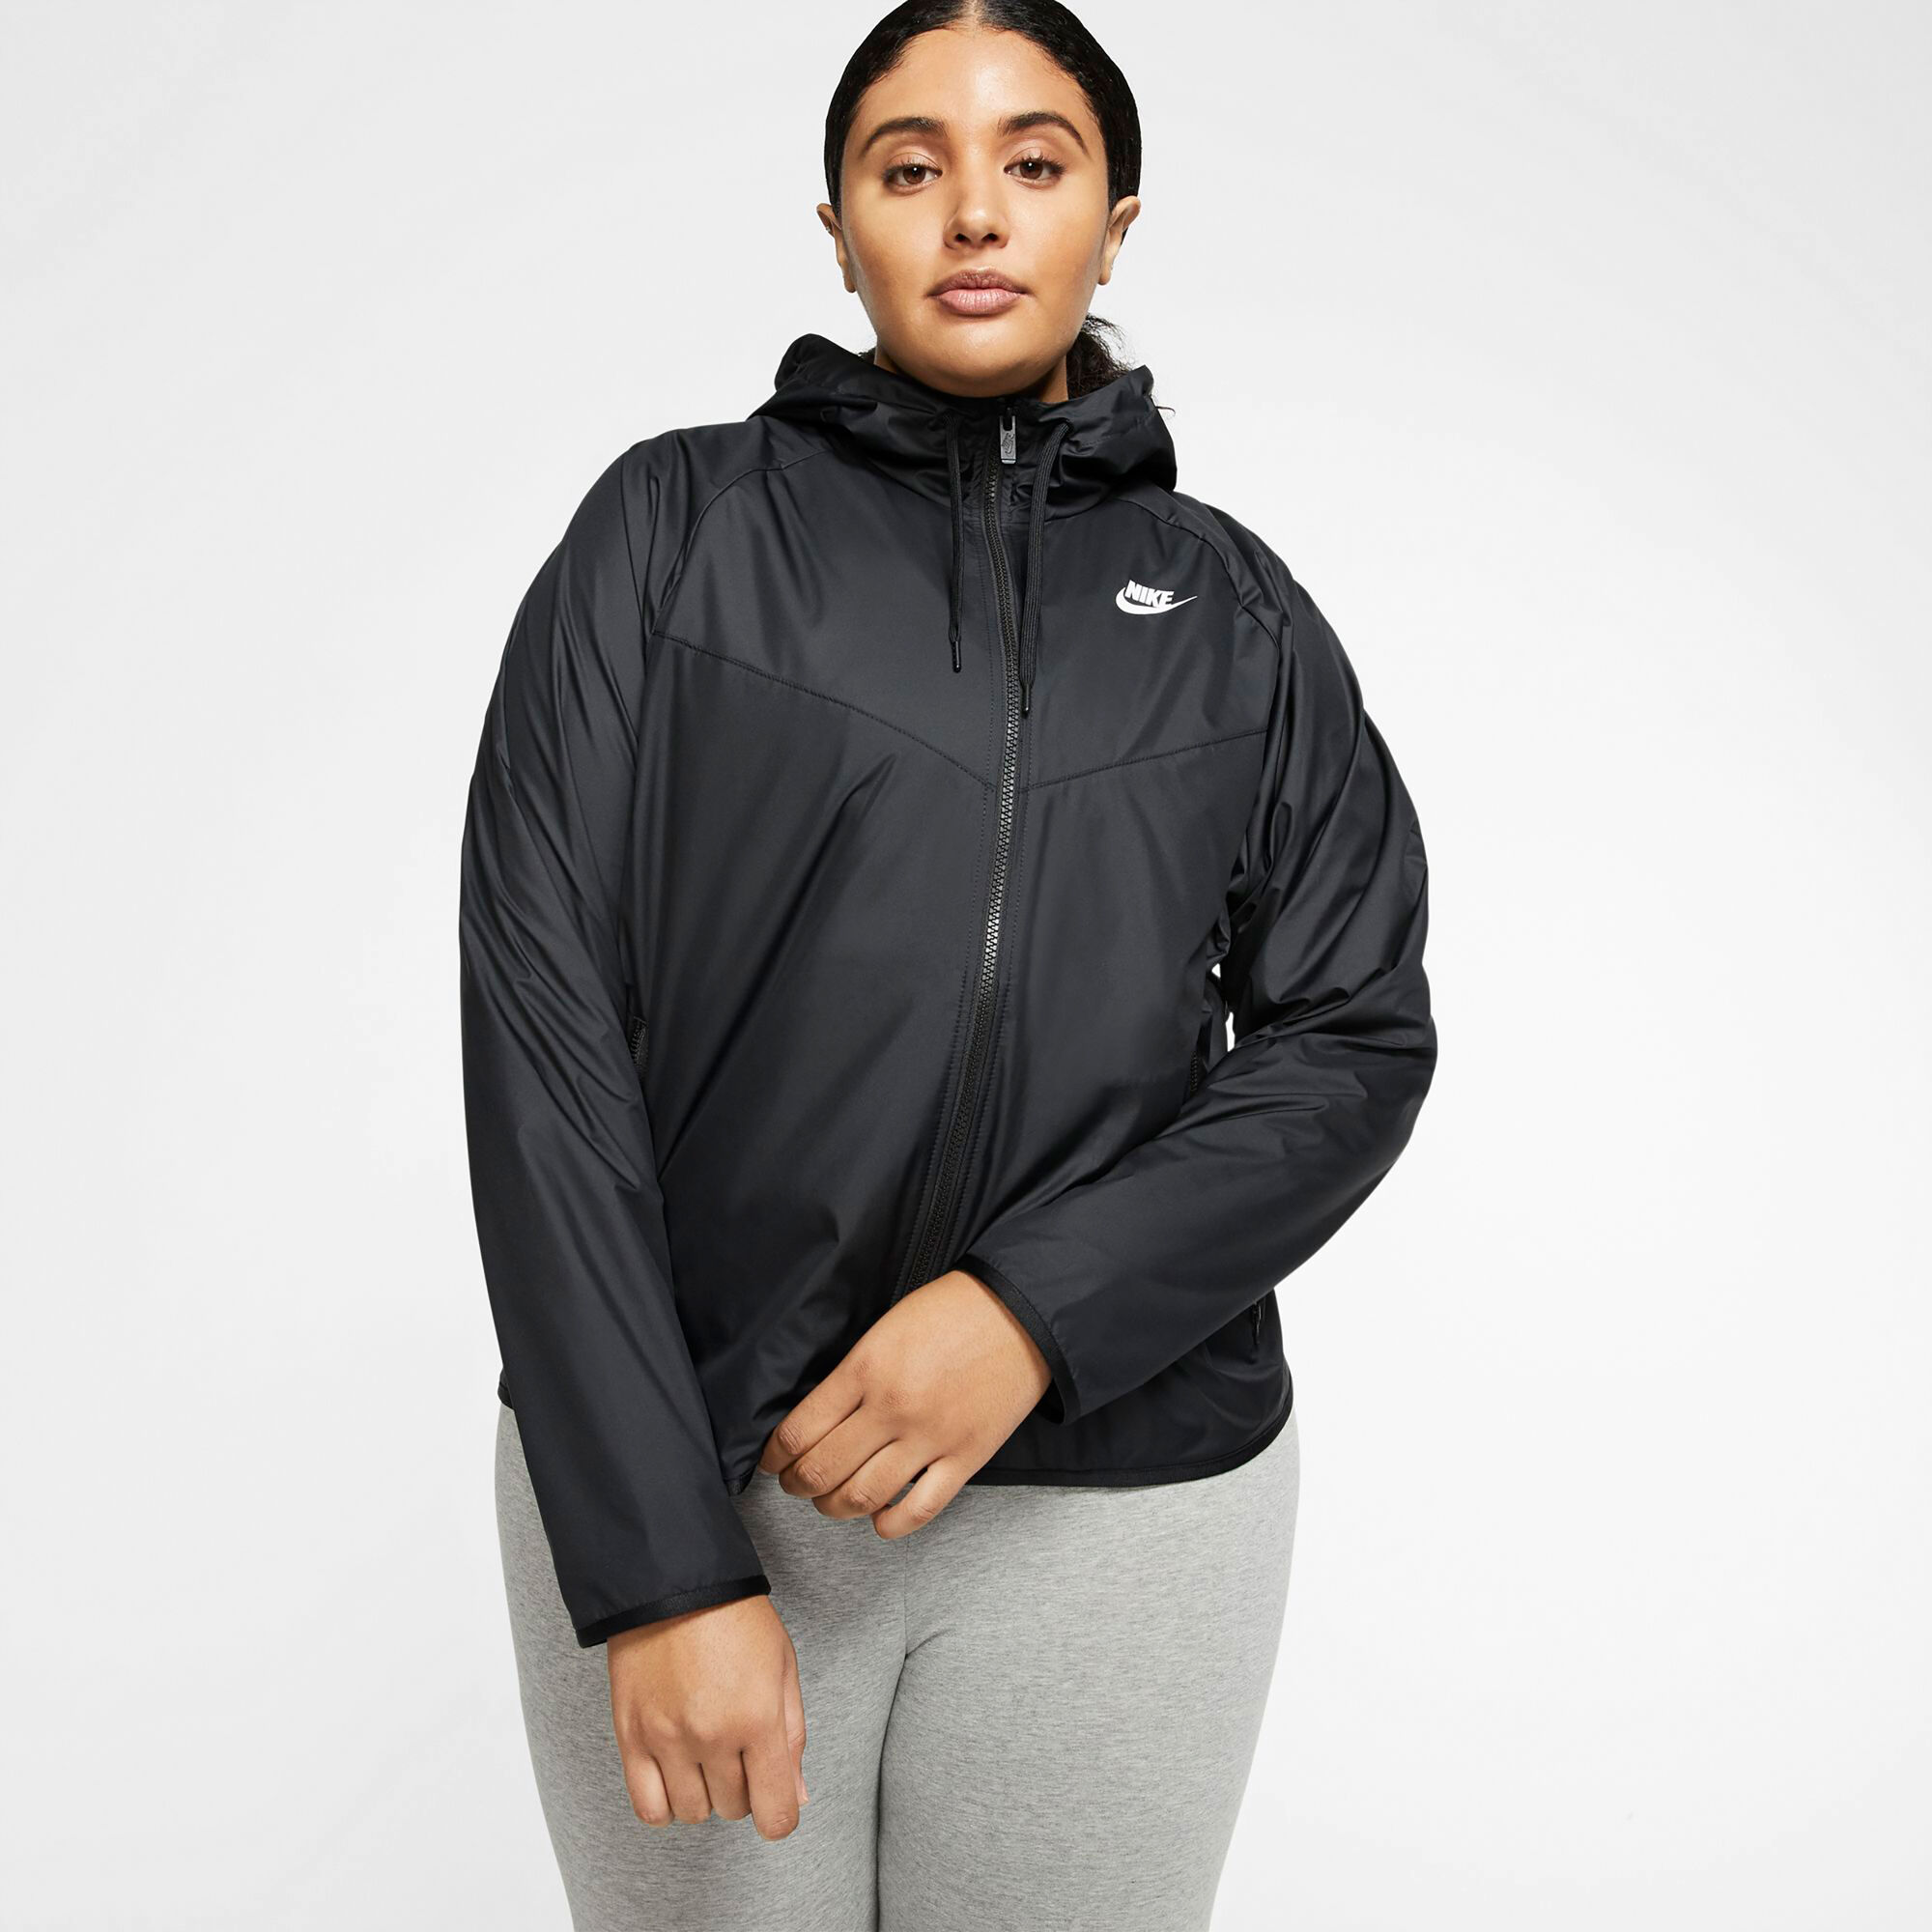 buy Nike Sportswear Plus Size Training Jacket Women - Black, White ...